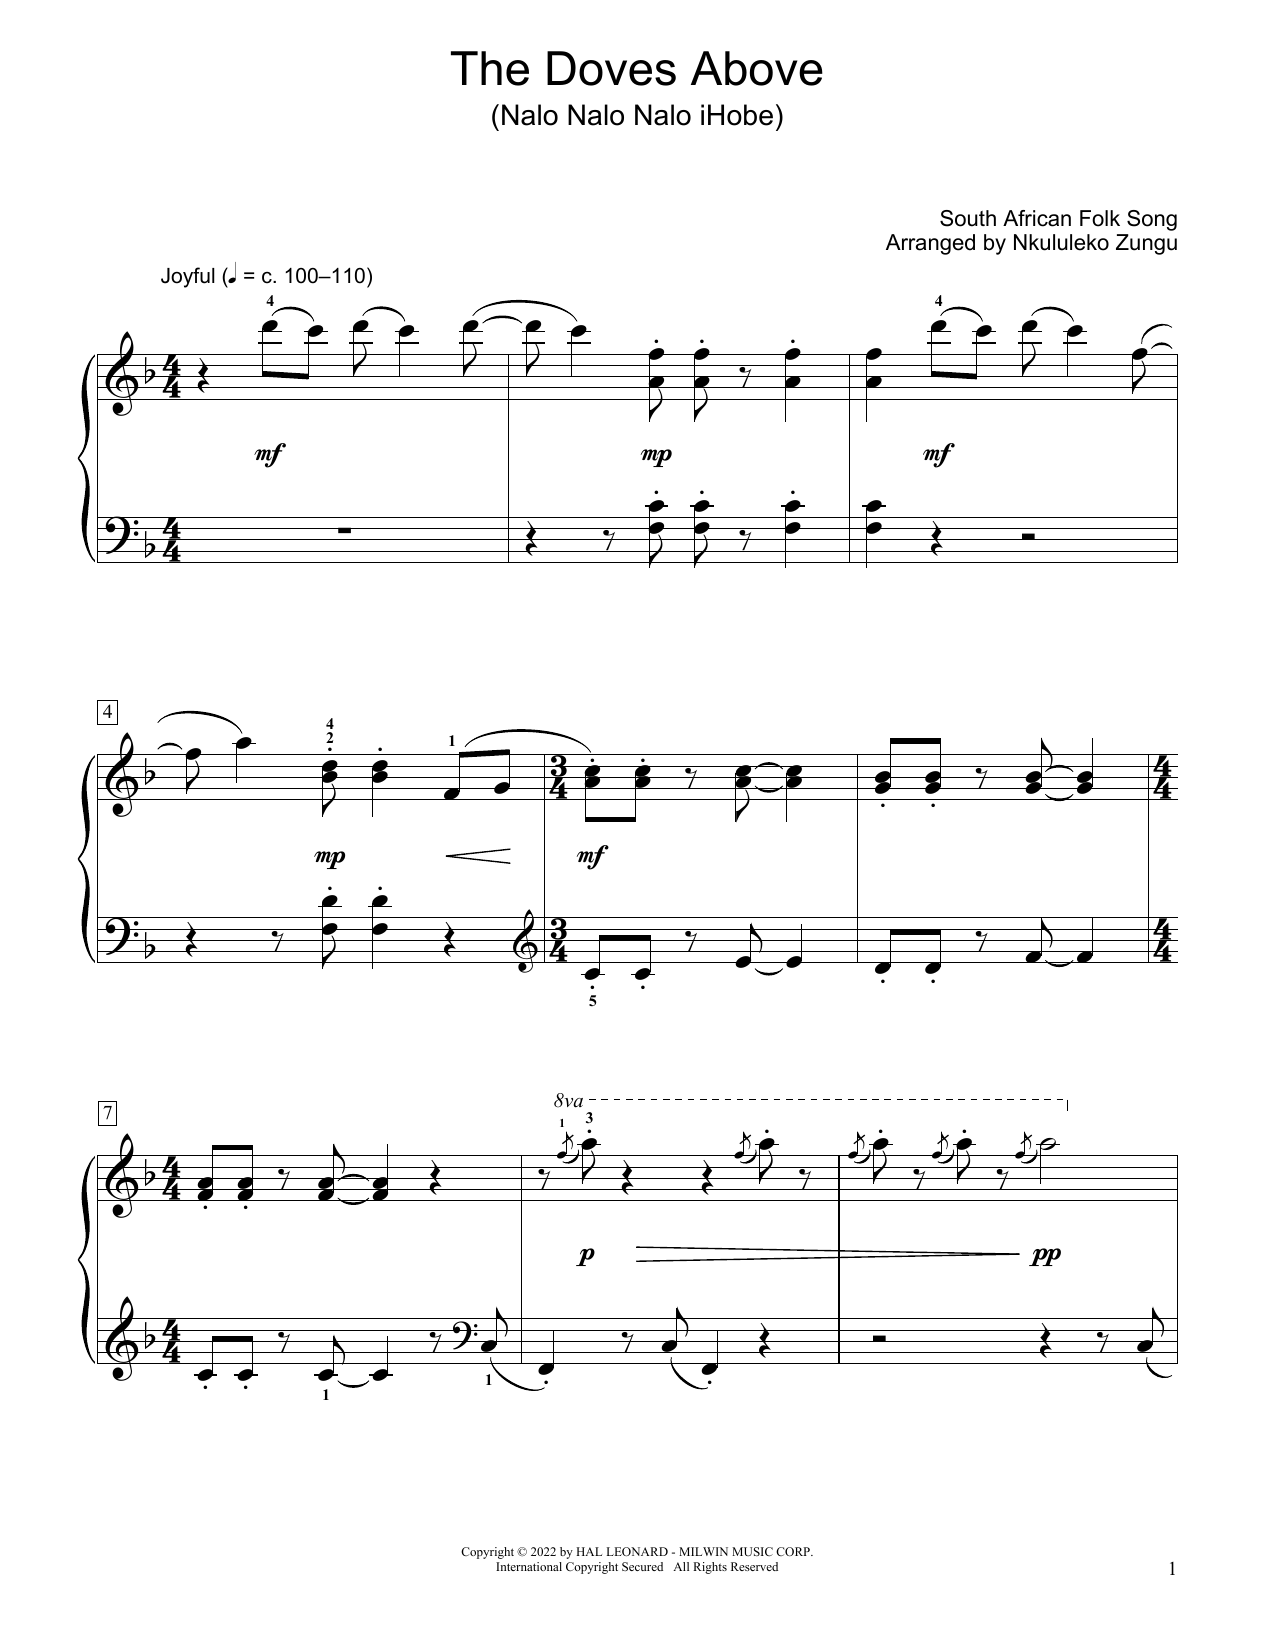 South African folk song The Doves Above (Nalo Nalo Nalo Ihobe) (arr. Nkululeko Zungu) Sheet Music Notes & Chords for Educational Piano - Download or Print PDF